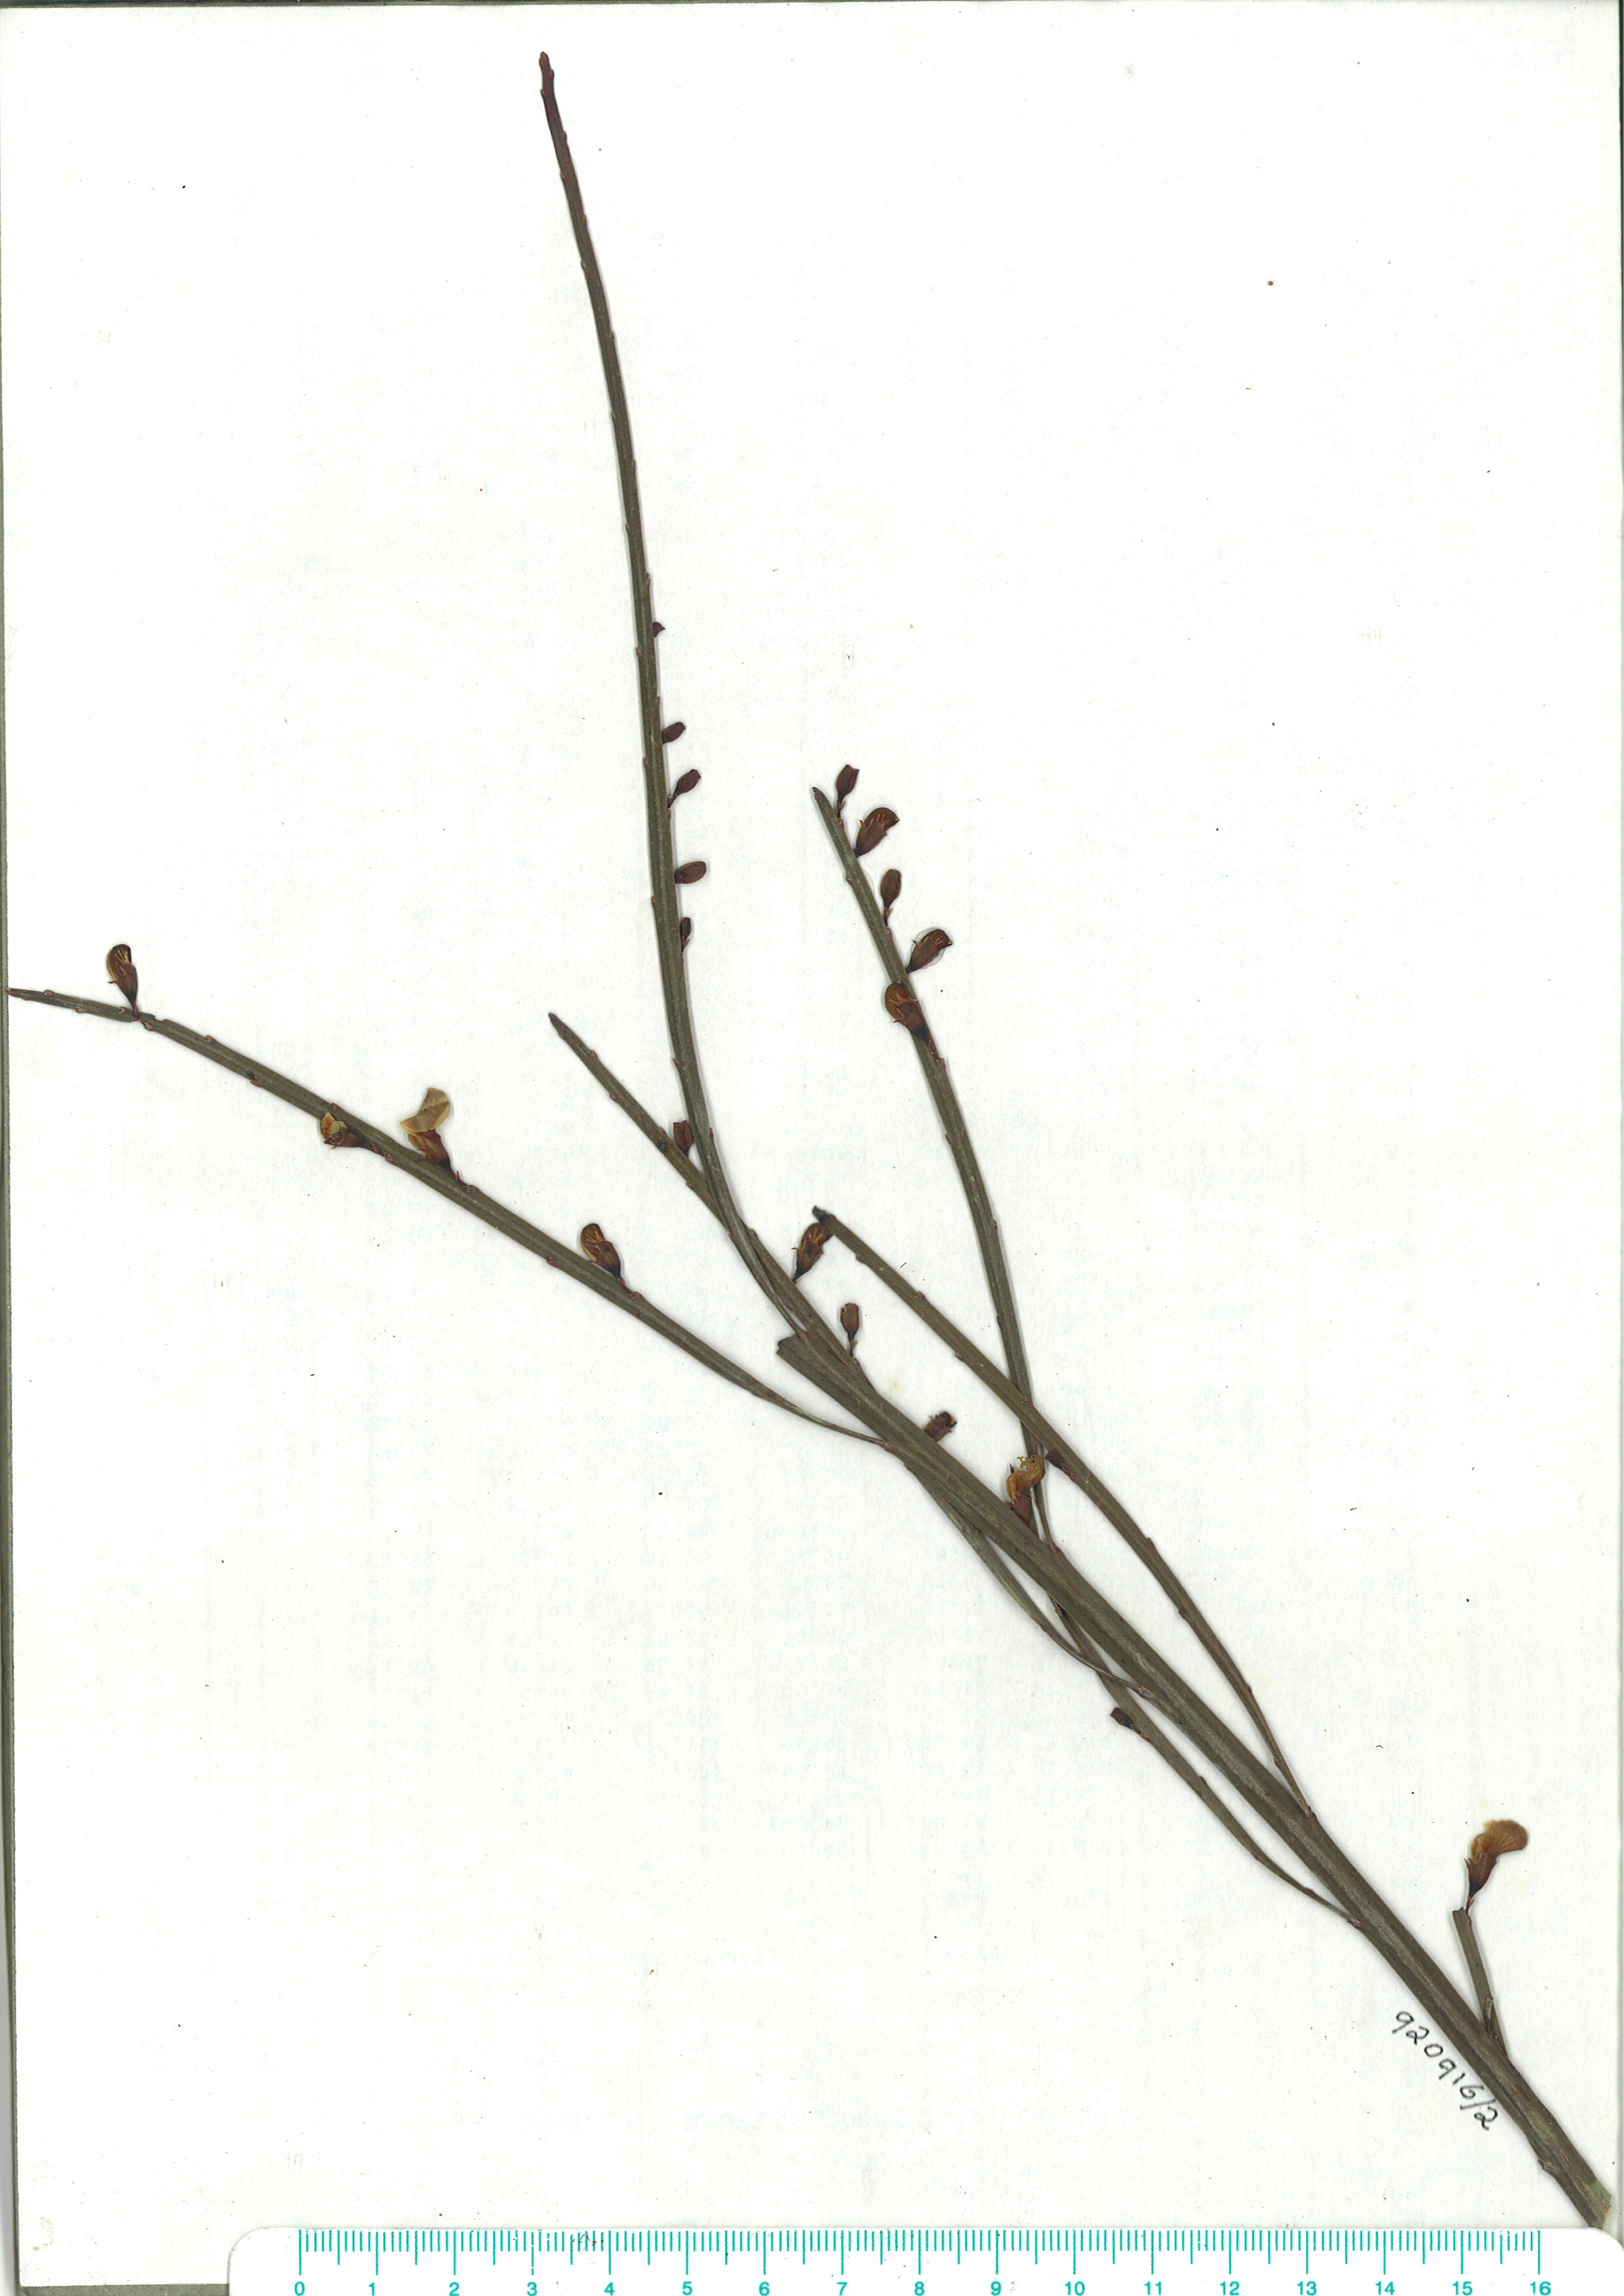 Scanned image of herbarium image of Bossiaea ensata